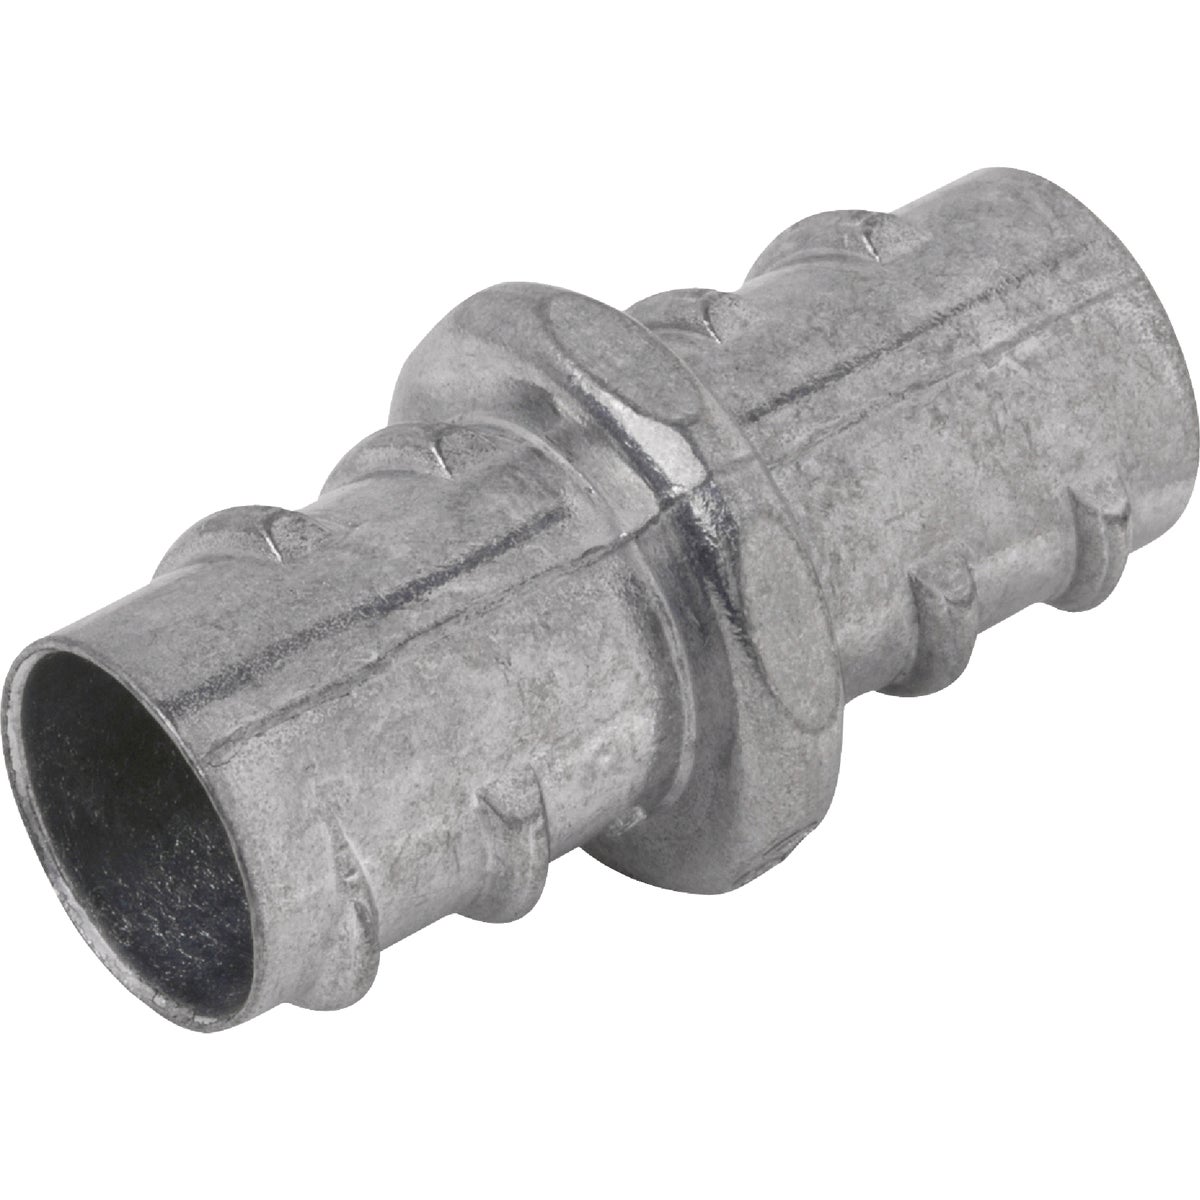 Item 507342, Screw-in type coupling for flexible metal conduit. Die-cast zinc.